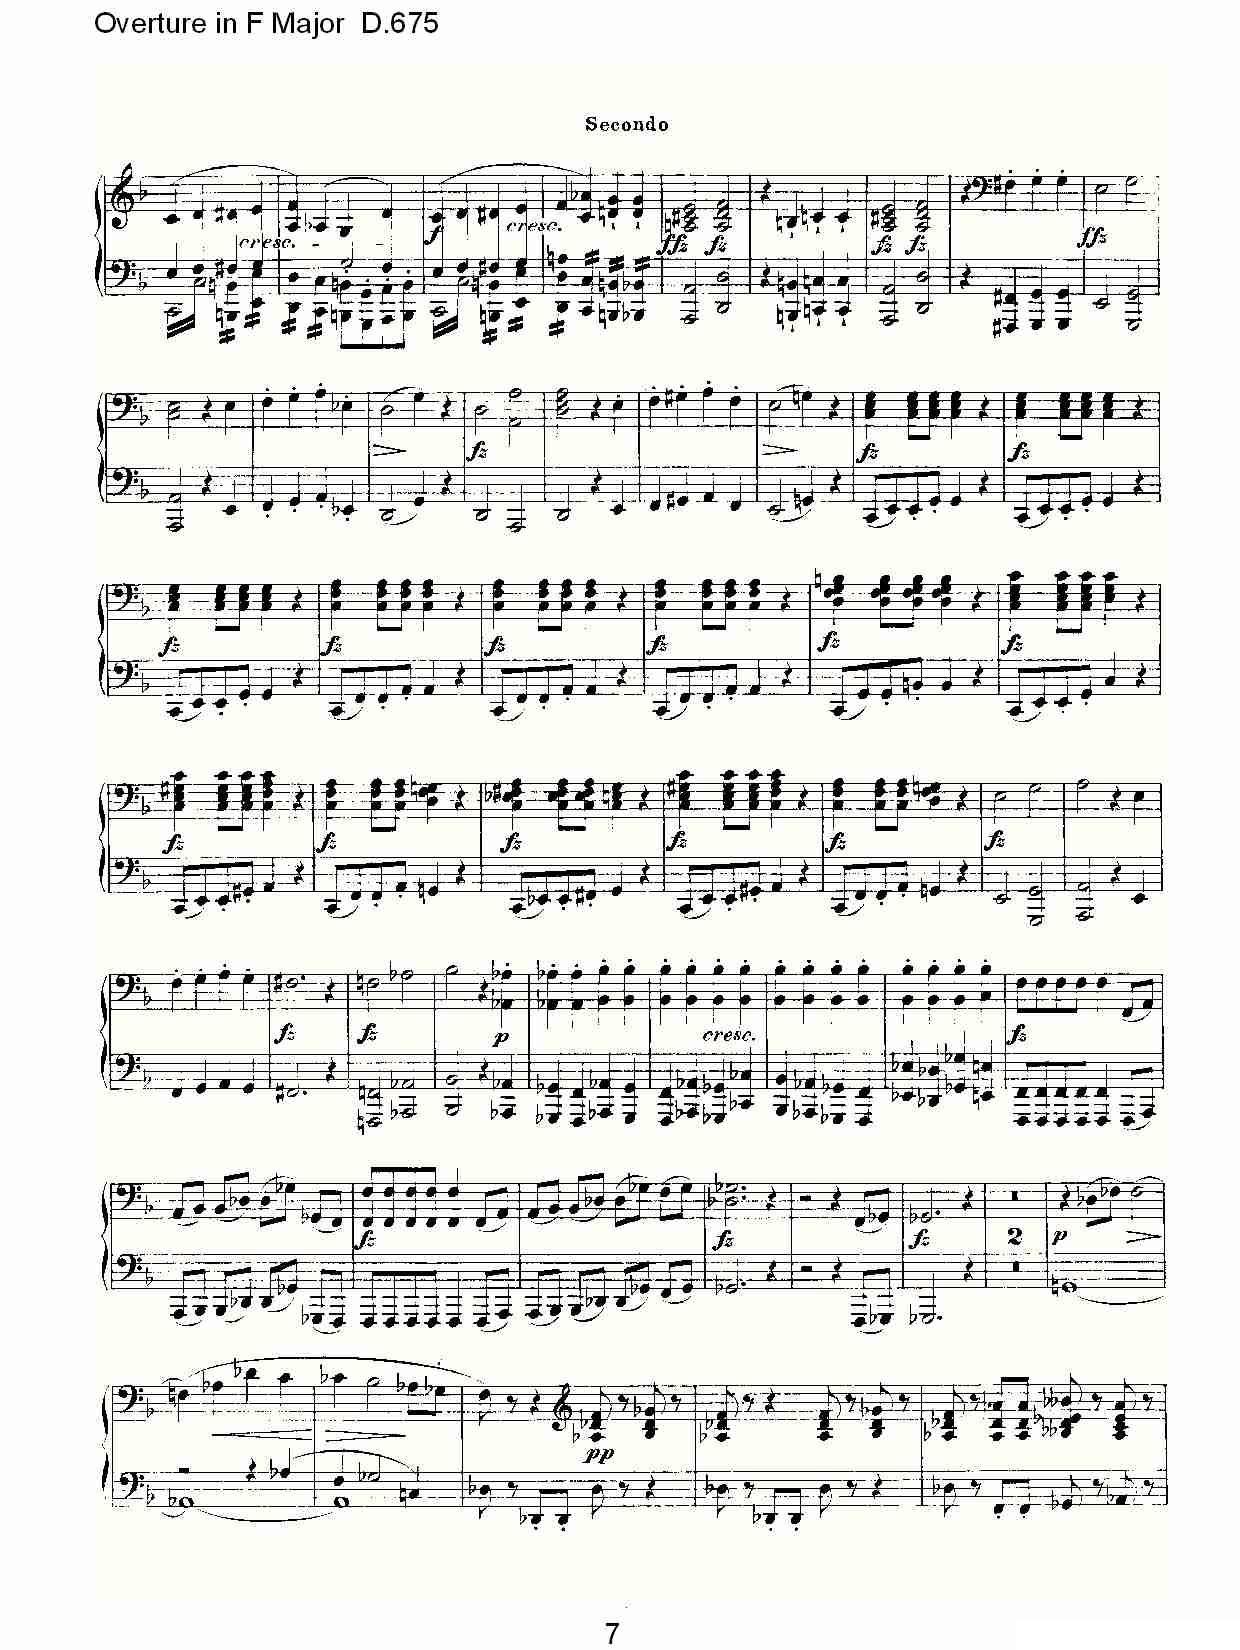 Overture in F Major D.675（Ｆ大调序曲 D.675）钢琴曲谱（图7）